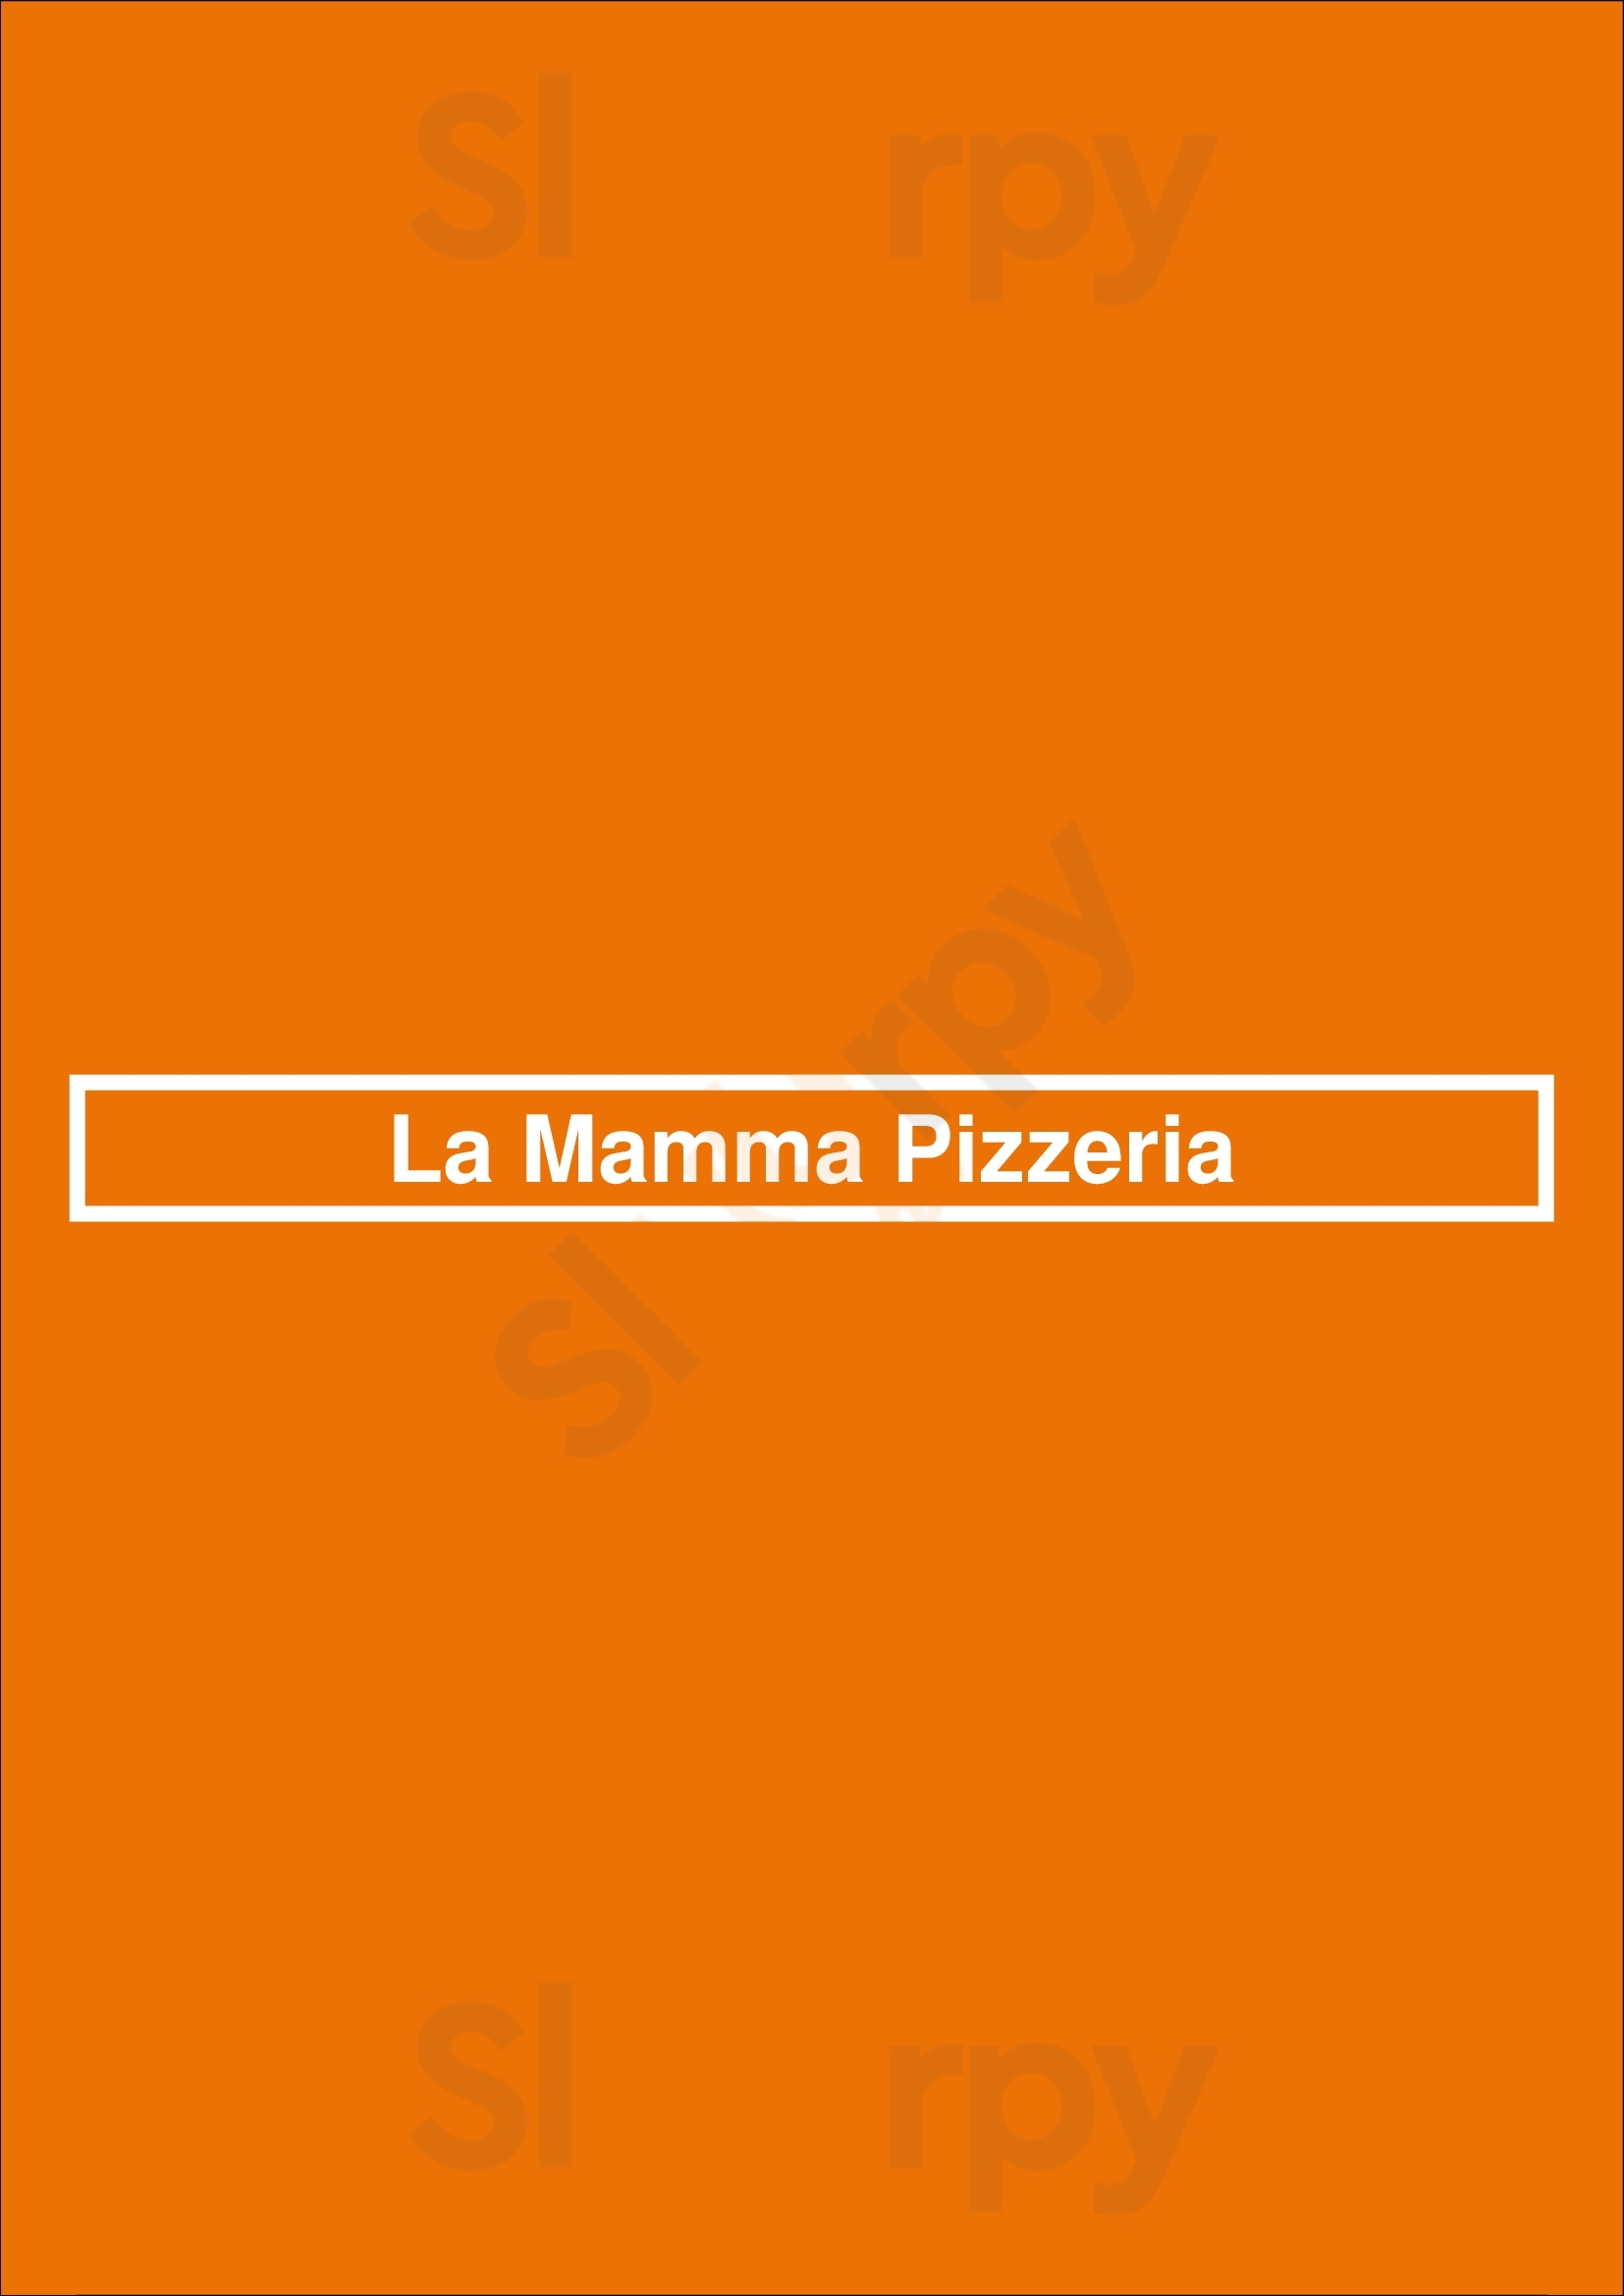 La Mamma Pizzeria Wigan Menu - 1